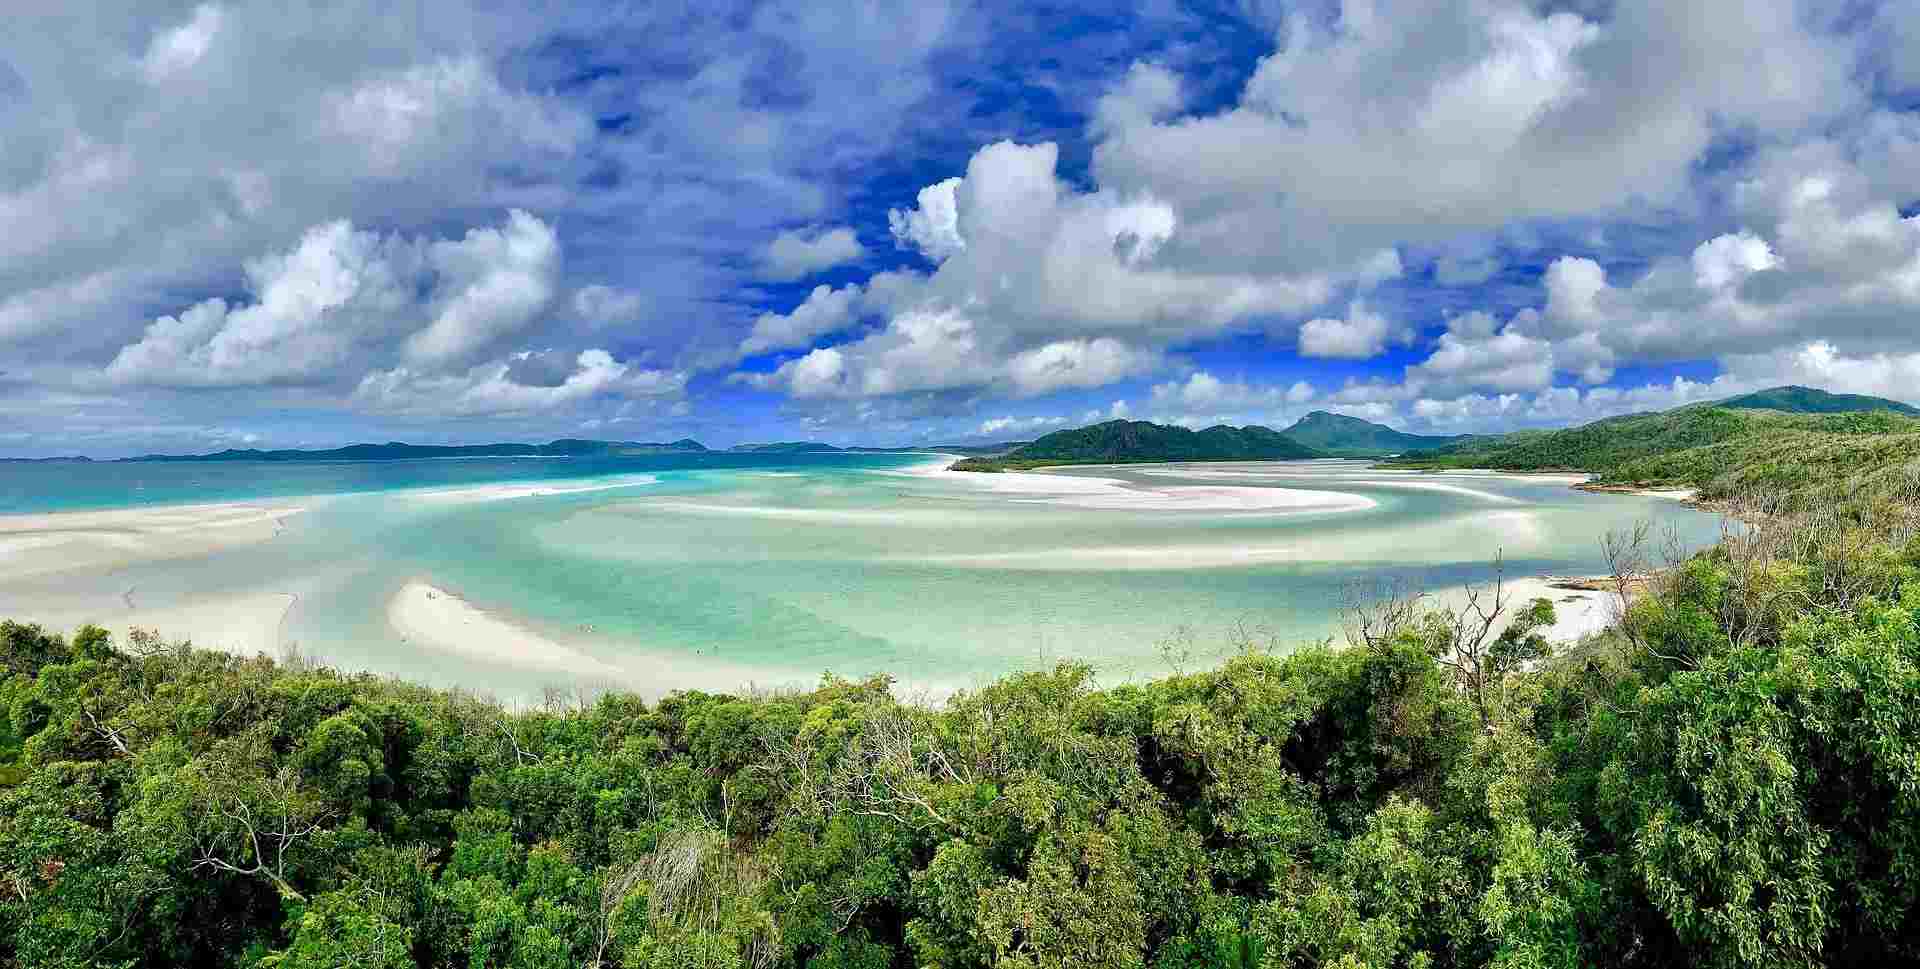 Whitehaven Beach in Australia is the whitest beach on earth.